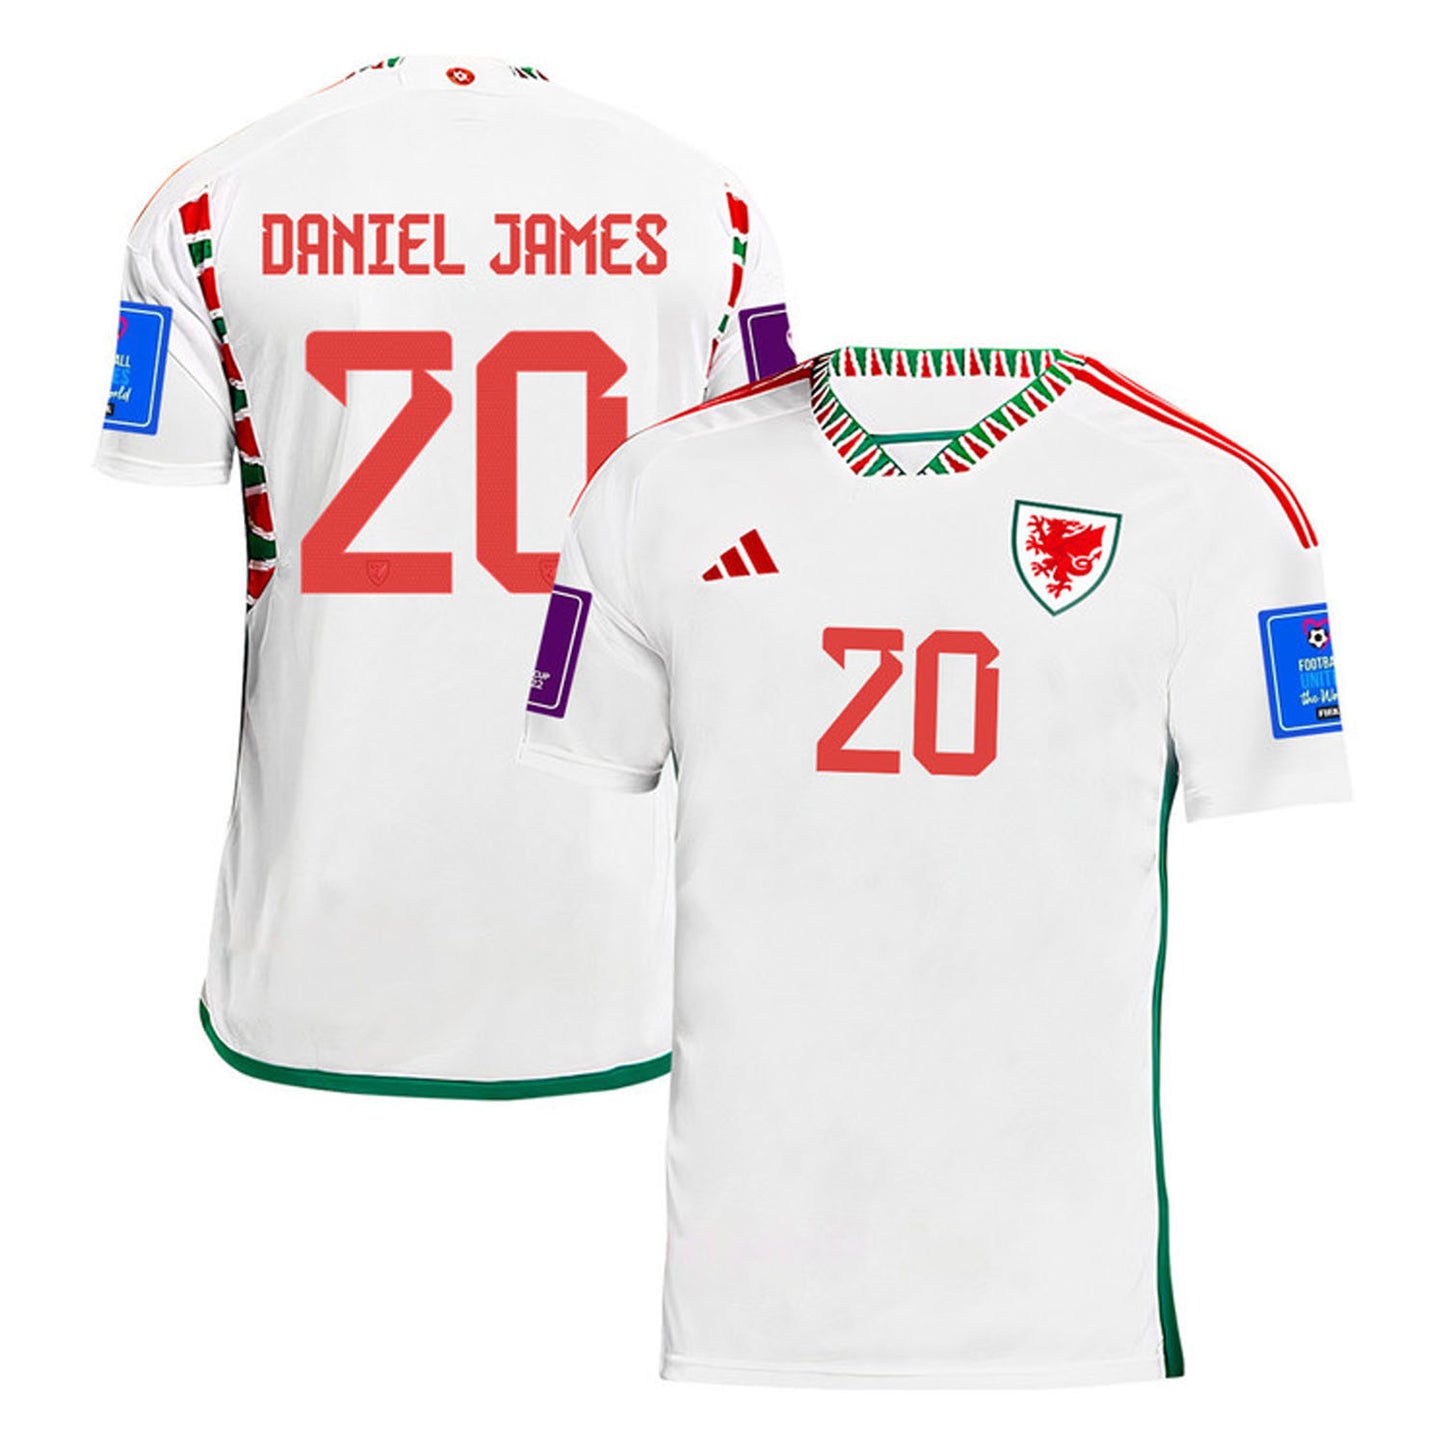 Daniel James Wales 20 Fifa World Cup Jersey